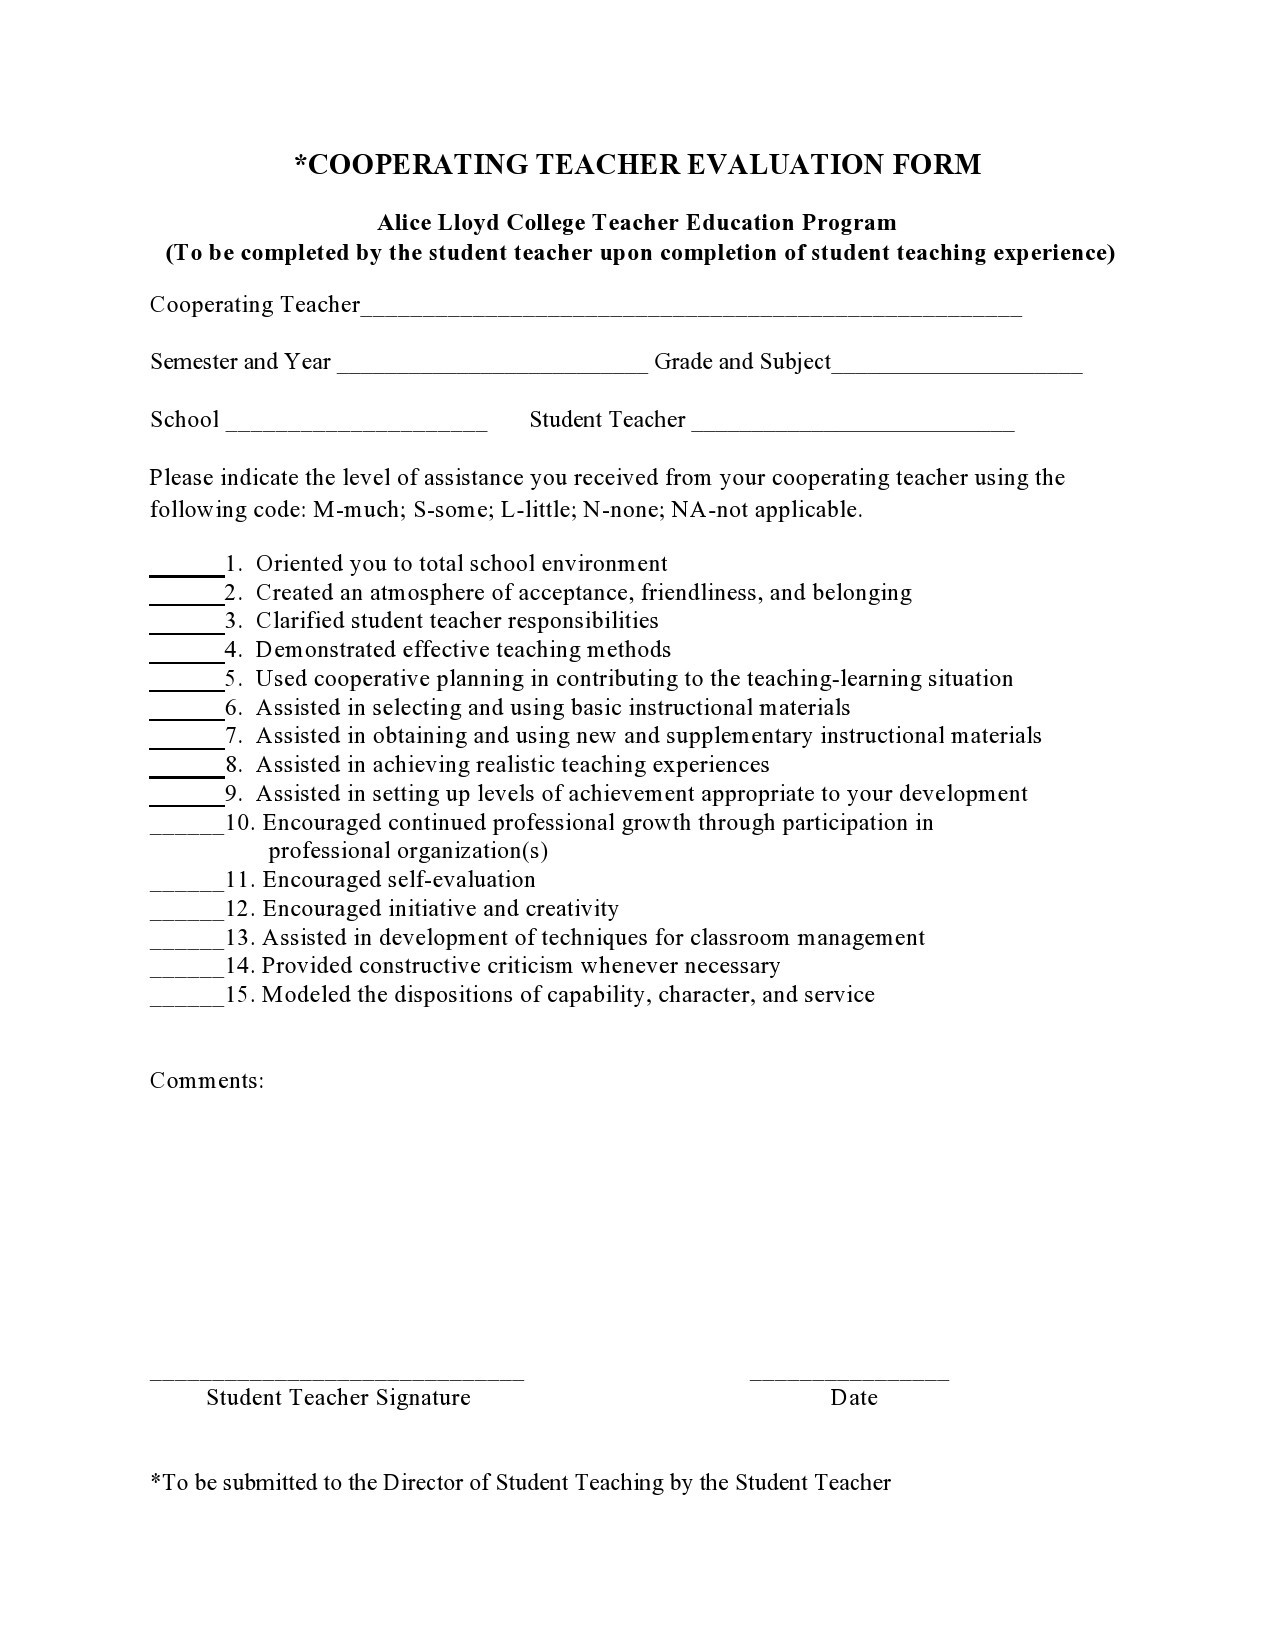 Free teacher evaluation form 14